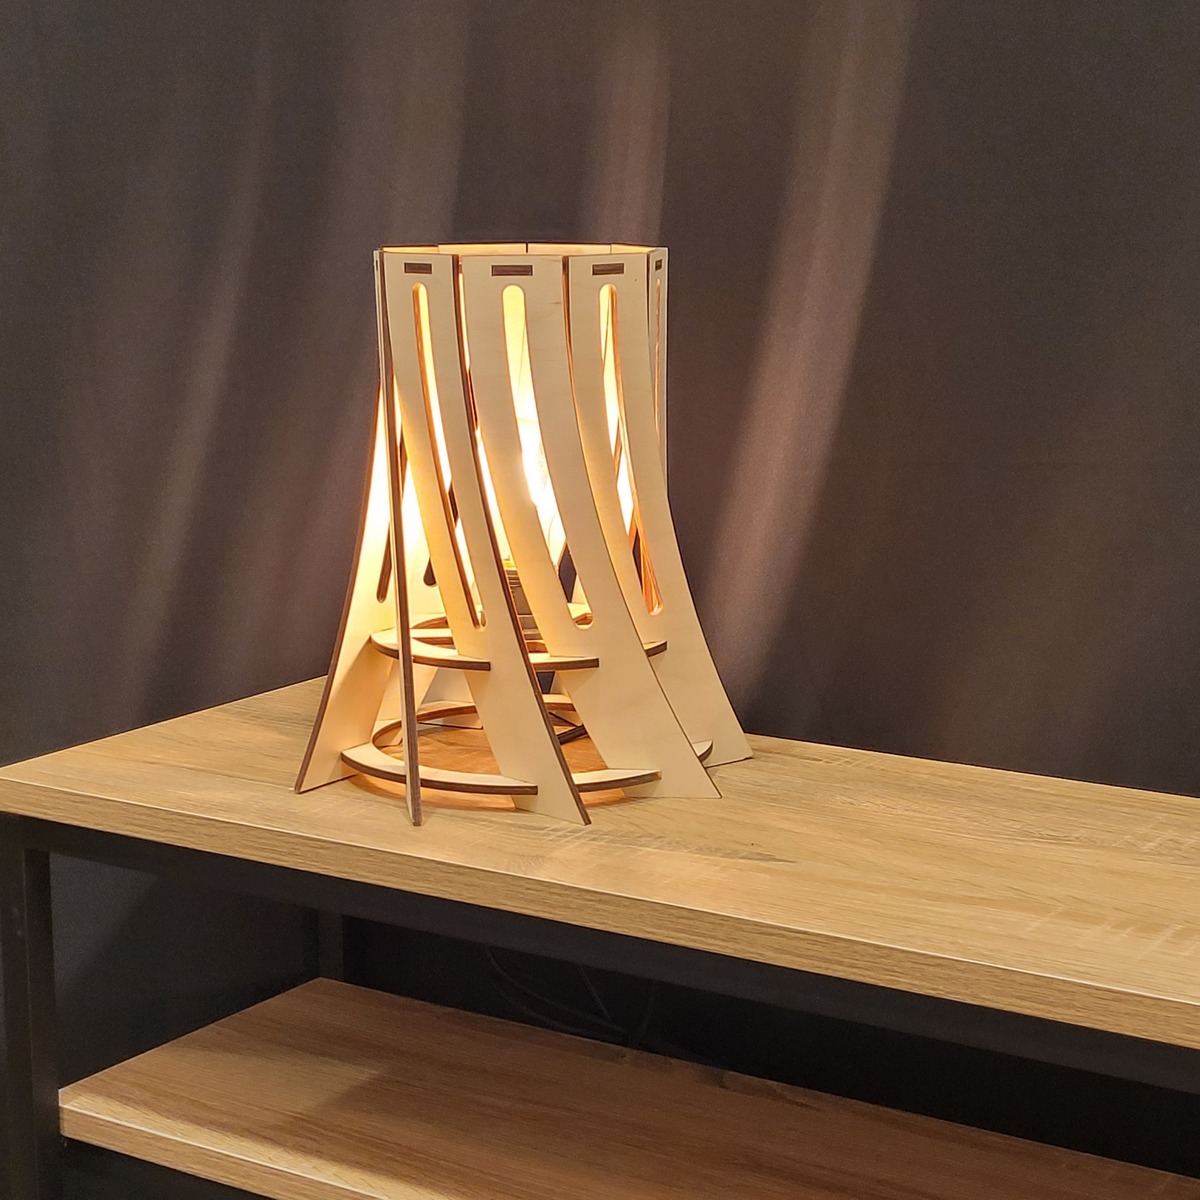 lampe en bois my wood volcano made in france une idee cadeau chez ugo et lea (6)